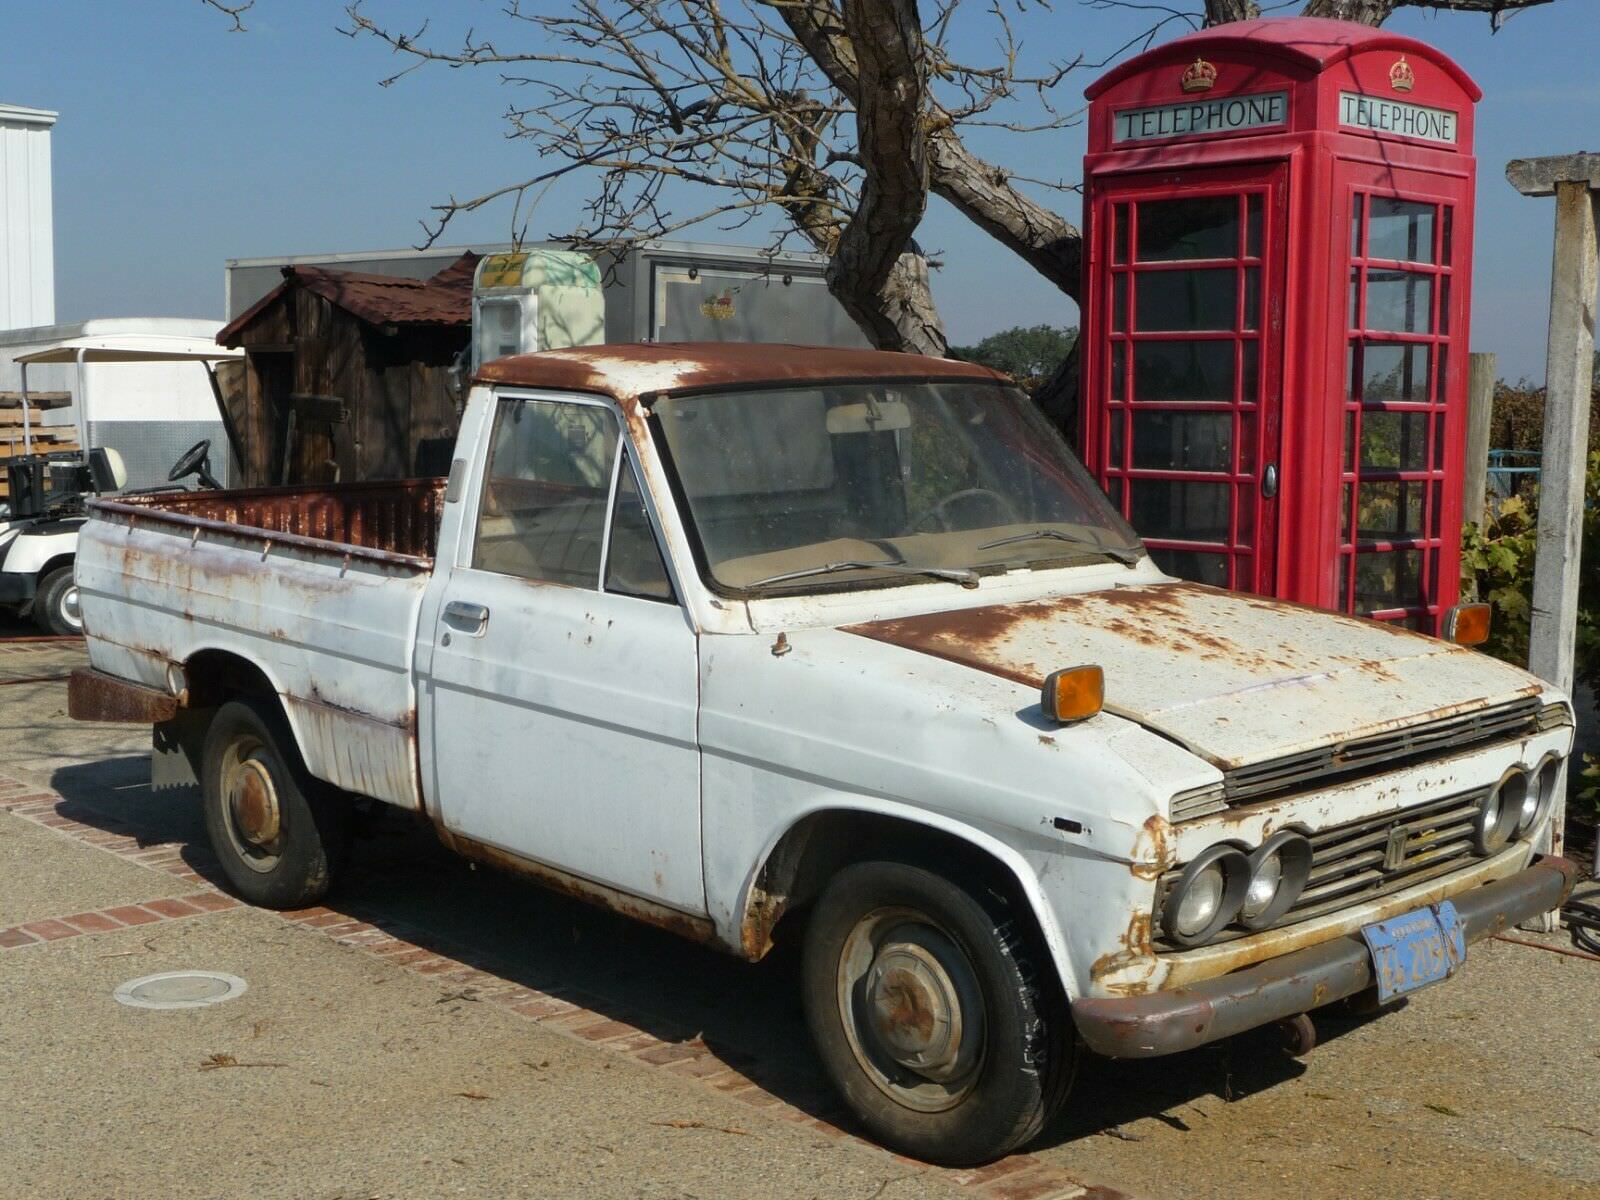 California Barn Find: A First Generation Toyota Hilux Pickup Truck via @Silodrome